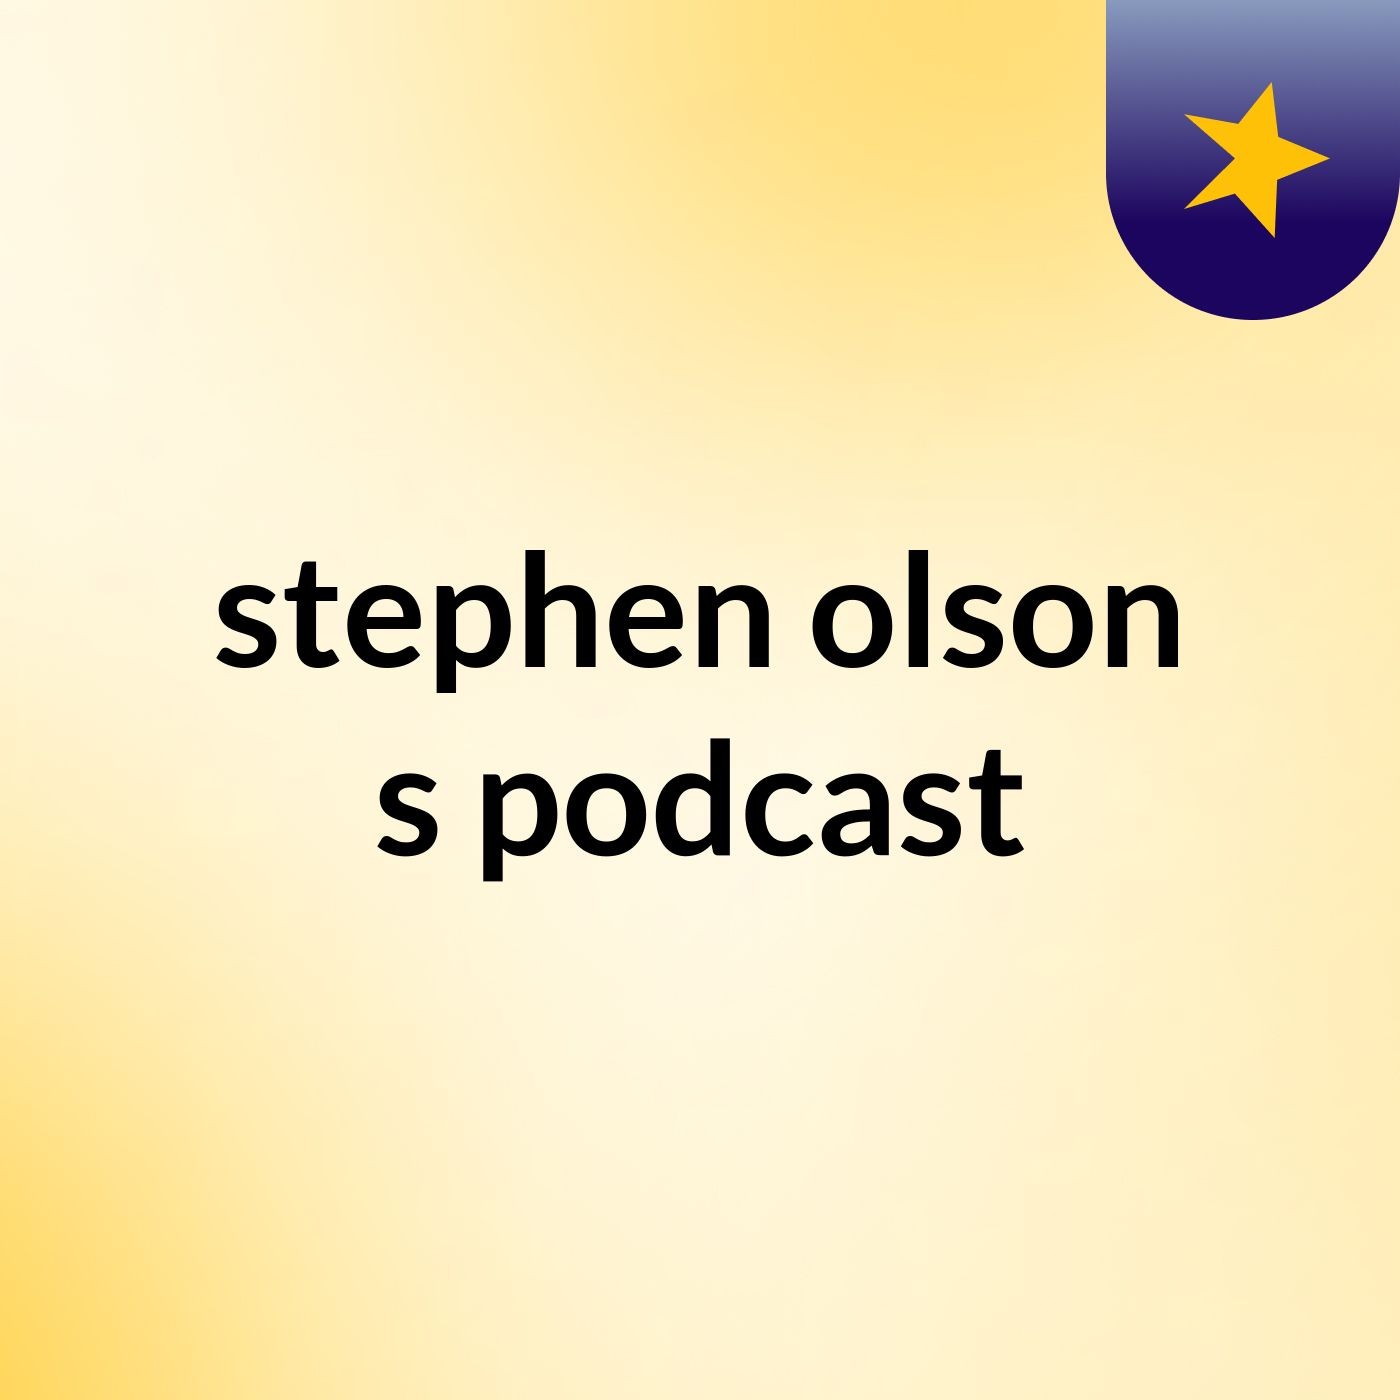 Episode 10 - stephen olson's podcast